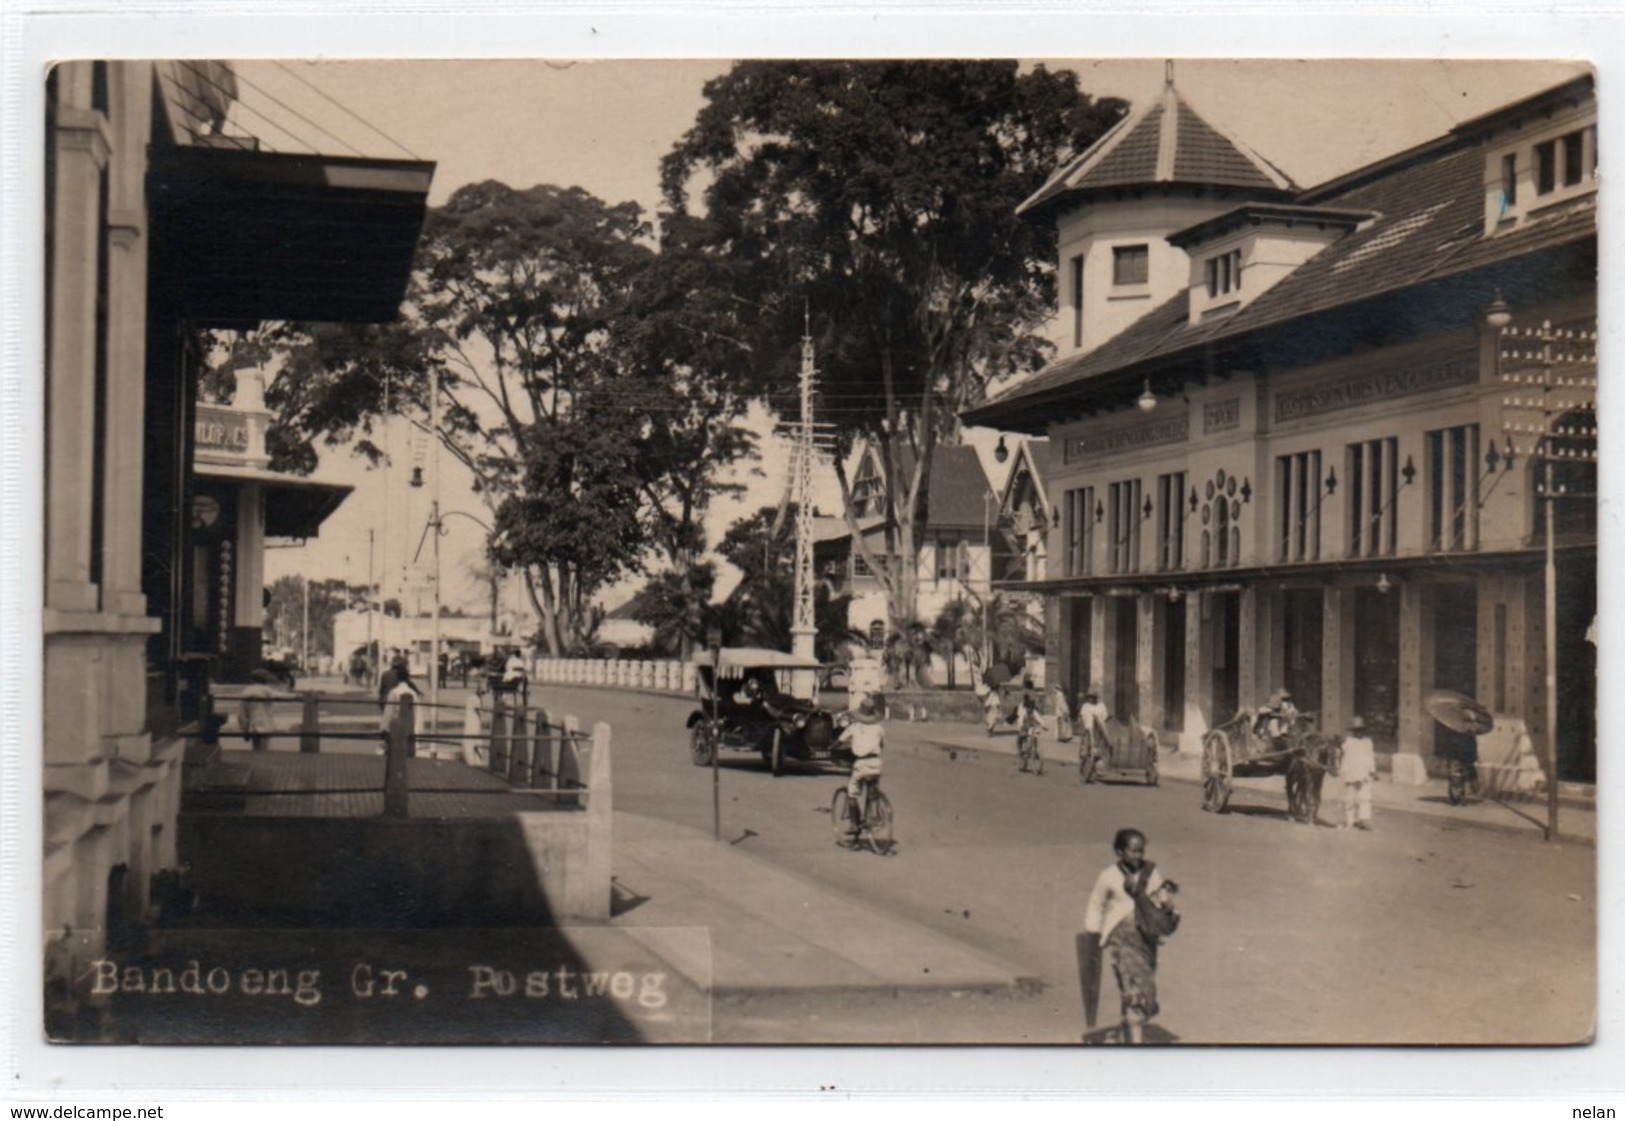 INDONESIA-JAVA-BANDOENG Gr-POSTWEG-1927-REAL PHOTO-VIAGGIATA - Indonesia